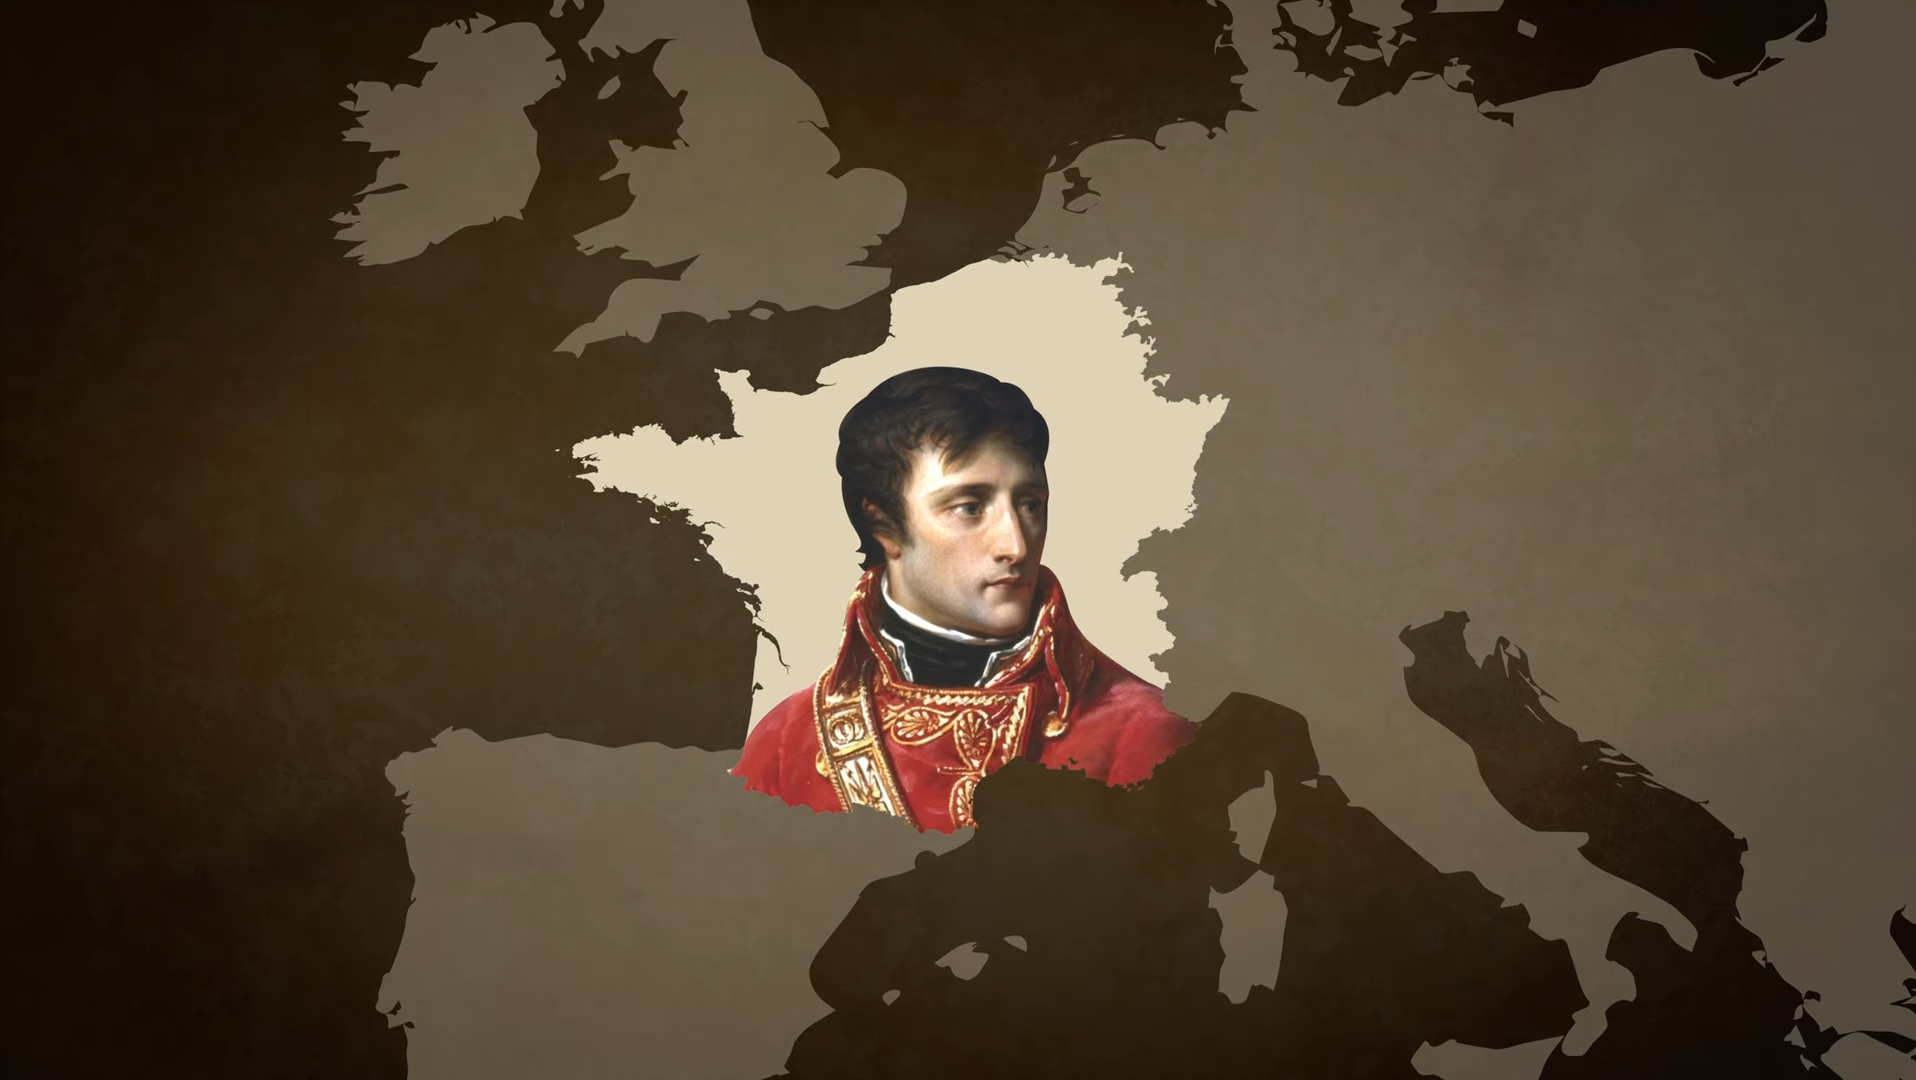 General 1916x1080 Napoleon Bonaparte map French digital art closed mouth short hair uniform face men dark hair